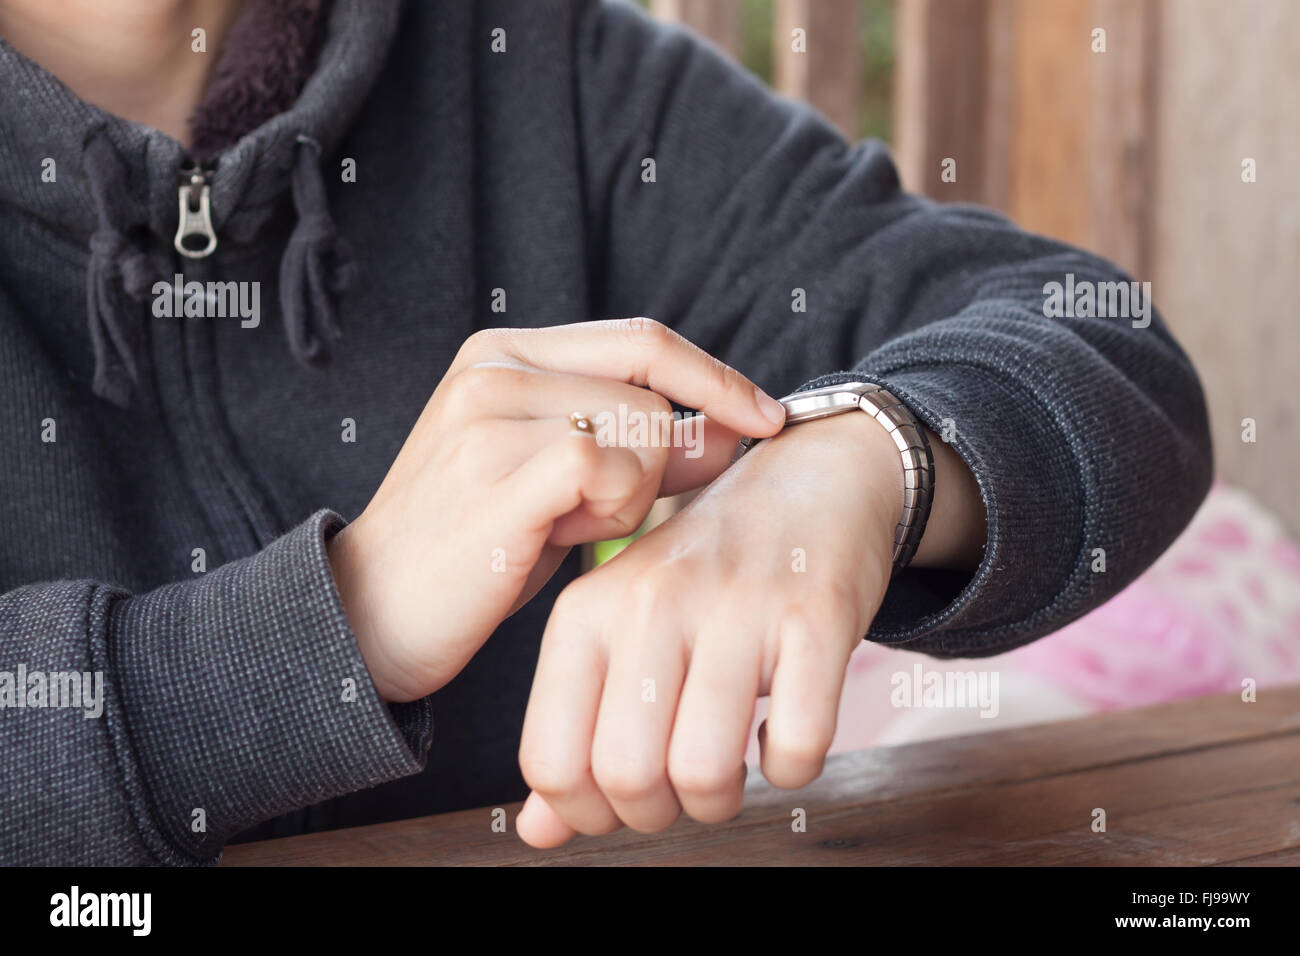 Woman checks the time on a wrist watch, stock photo Stock Photo